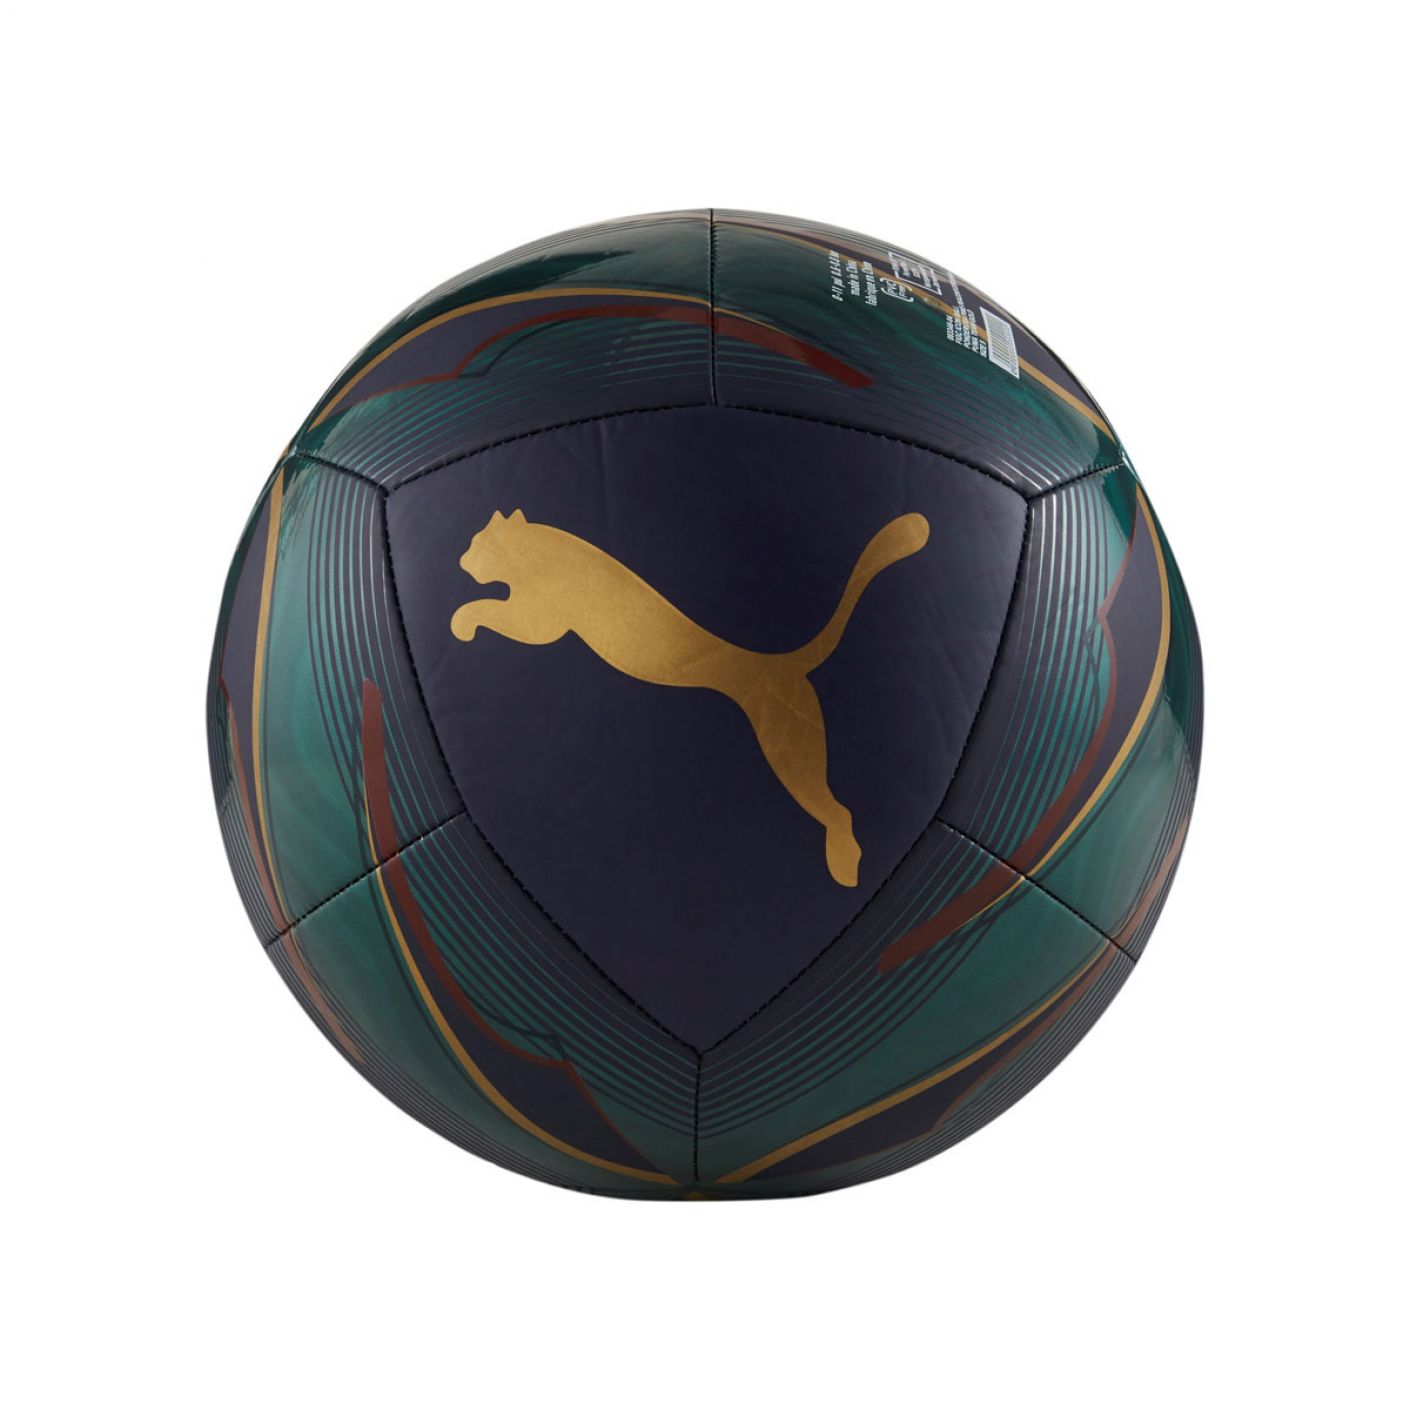 Puma Figc Ball Italy Green